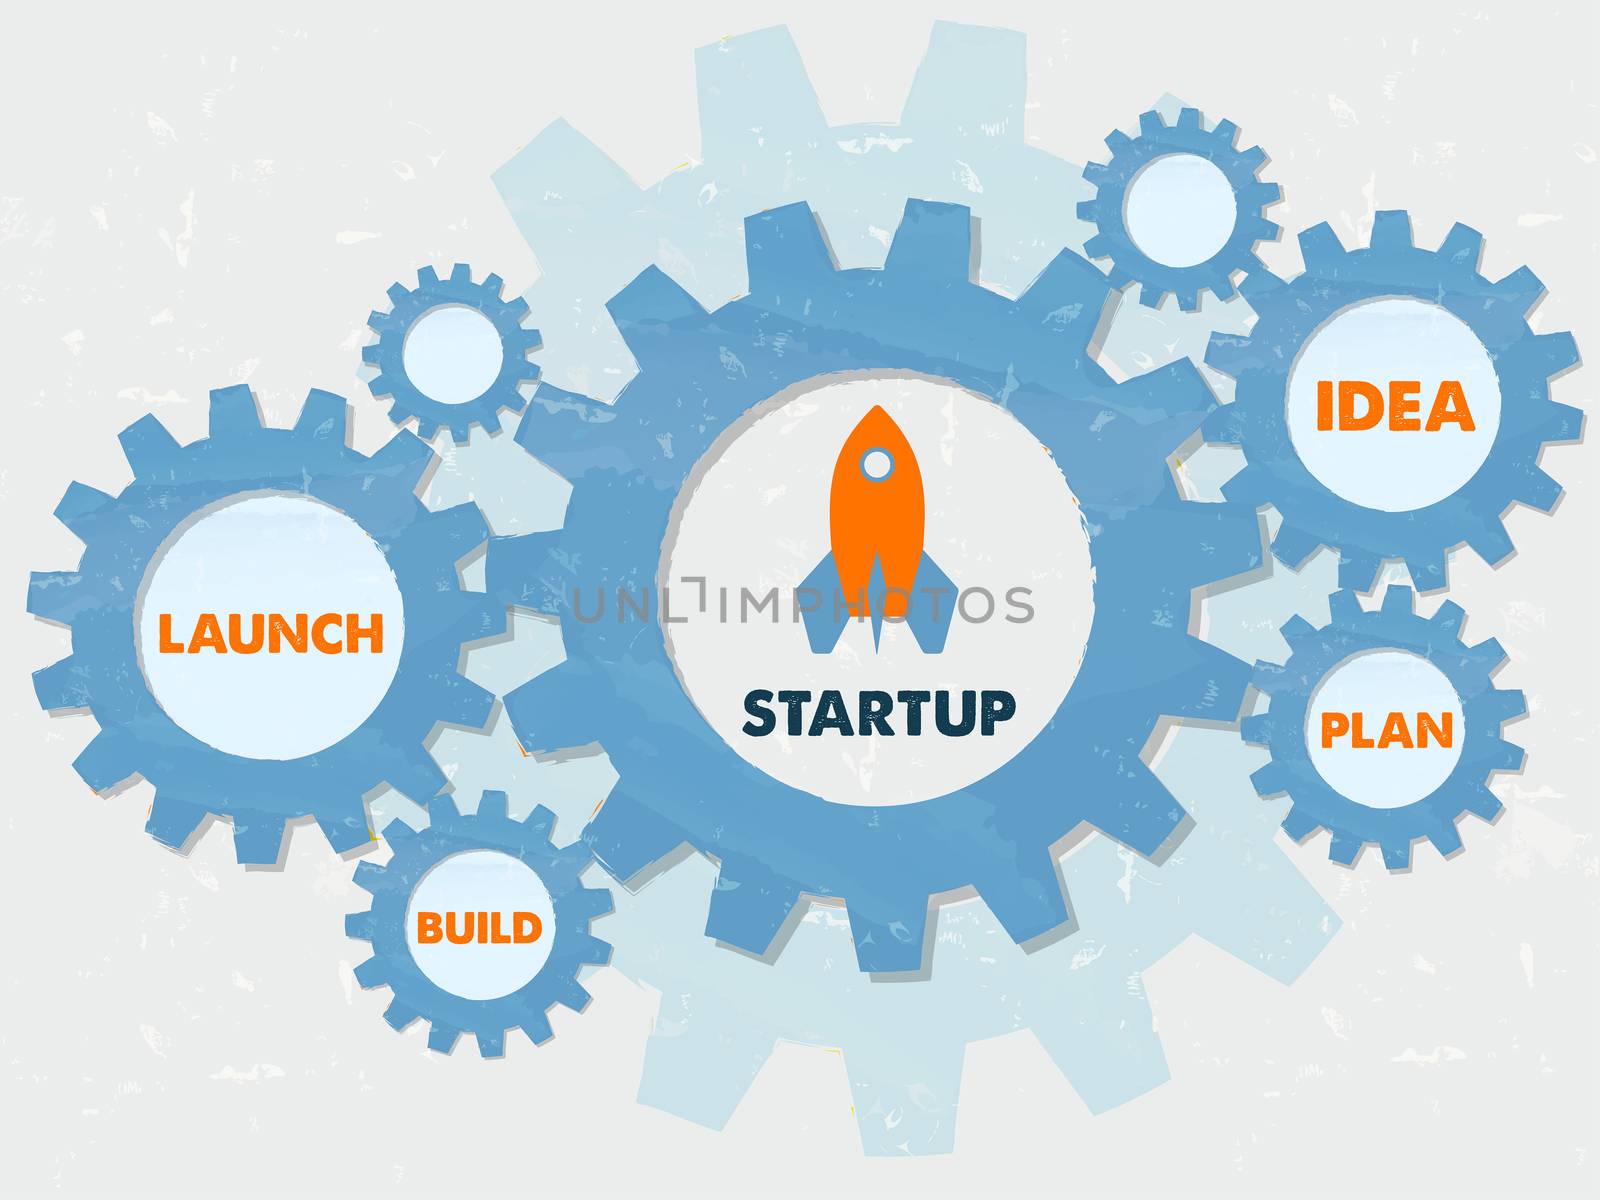 start up, launch, build, idea, plan - business development concept words - orange text in blue grunge flat design gear wheels